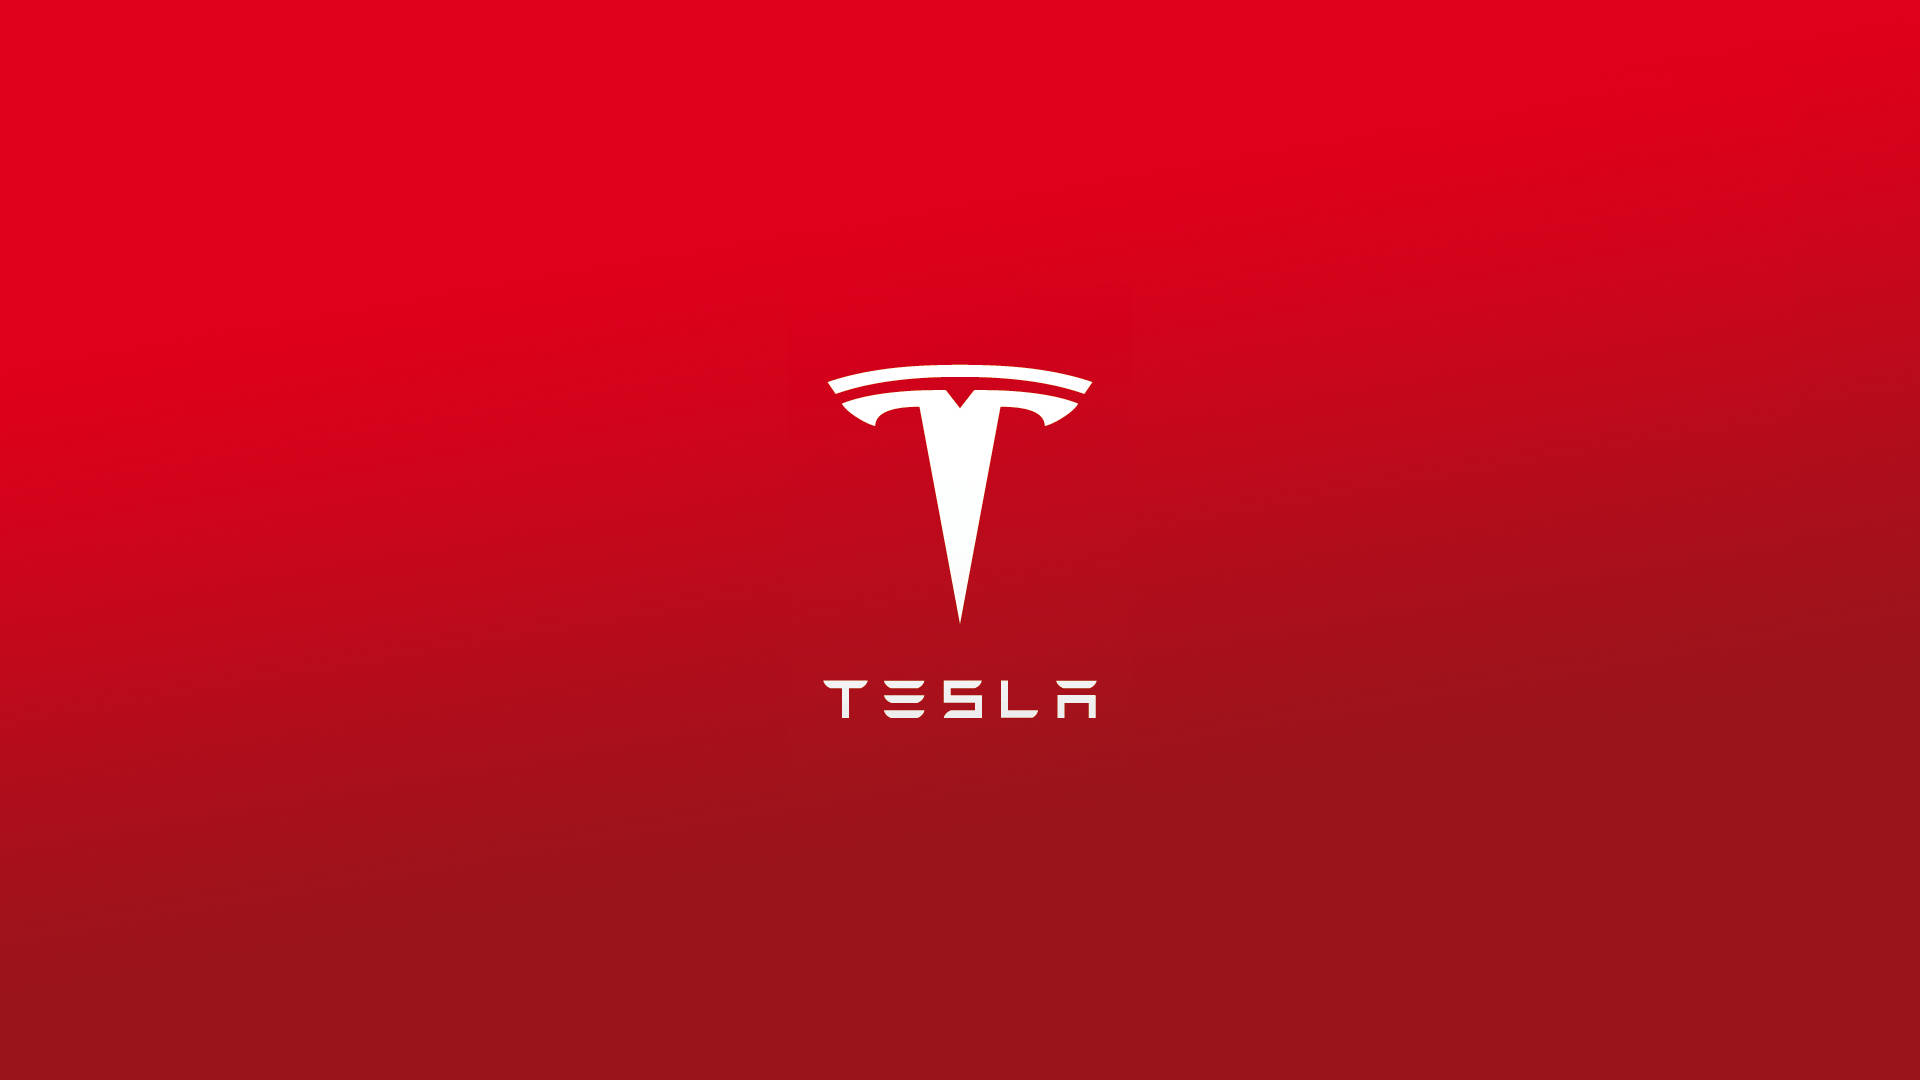 Tesla Full Hd Red